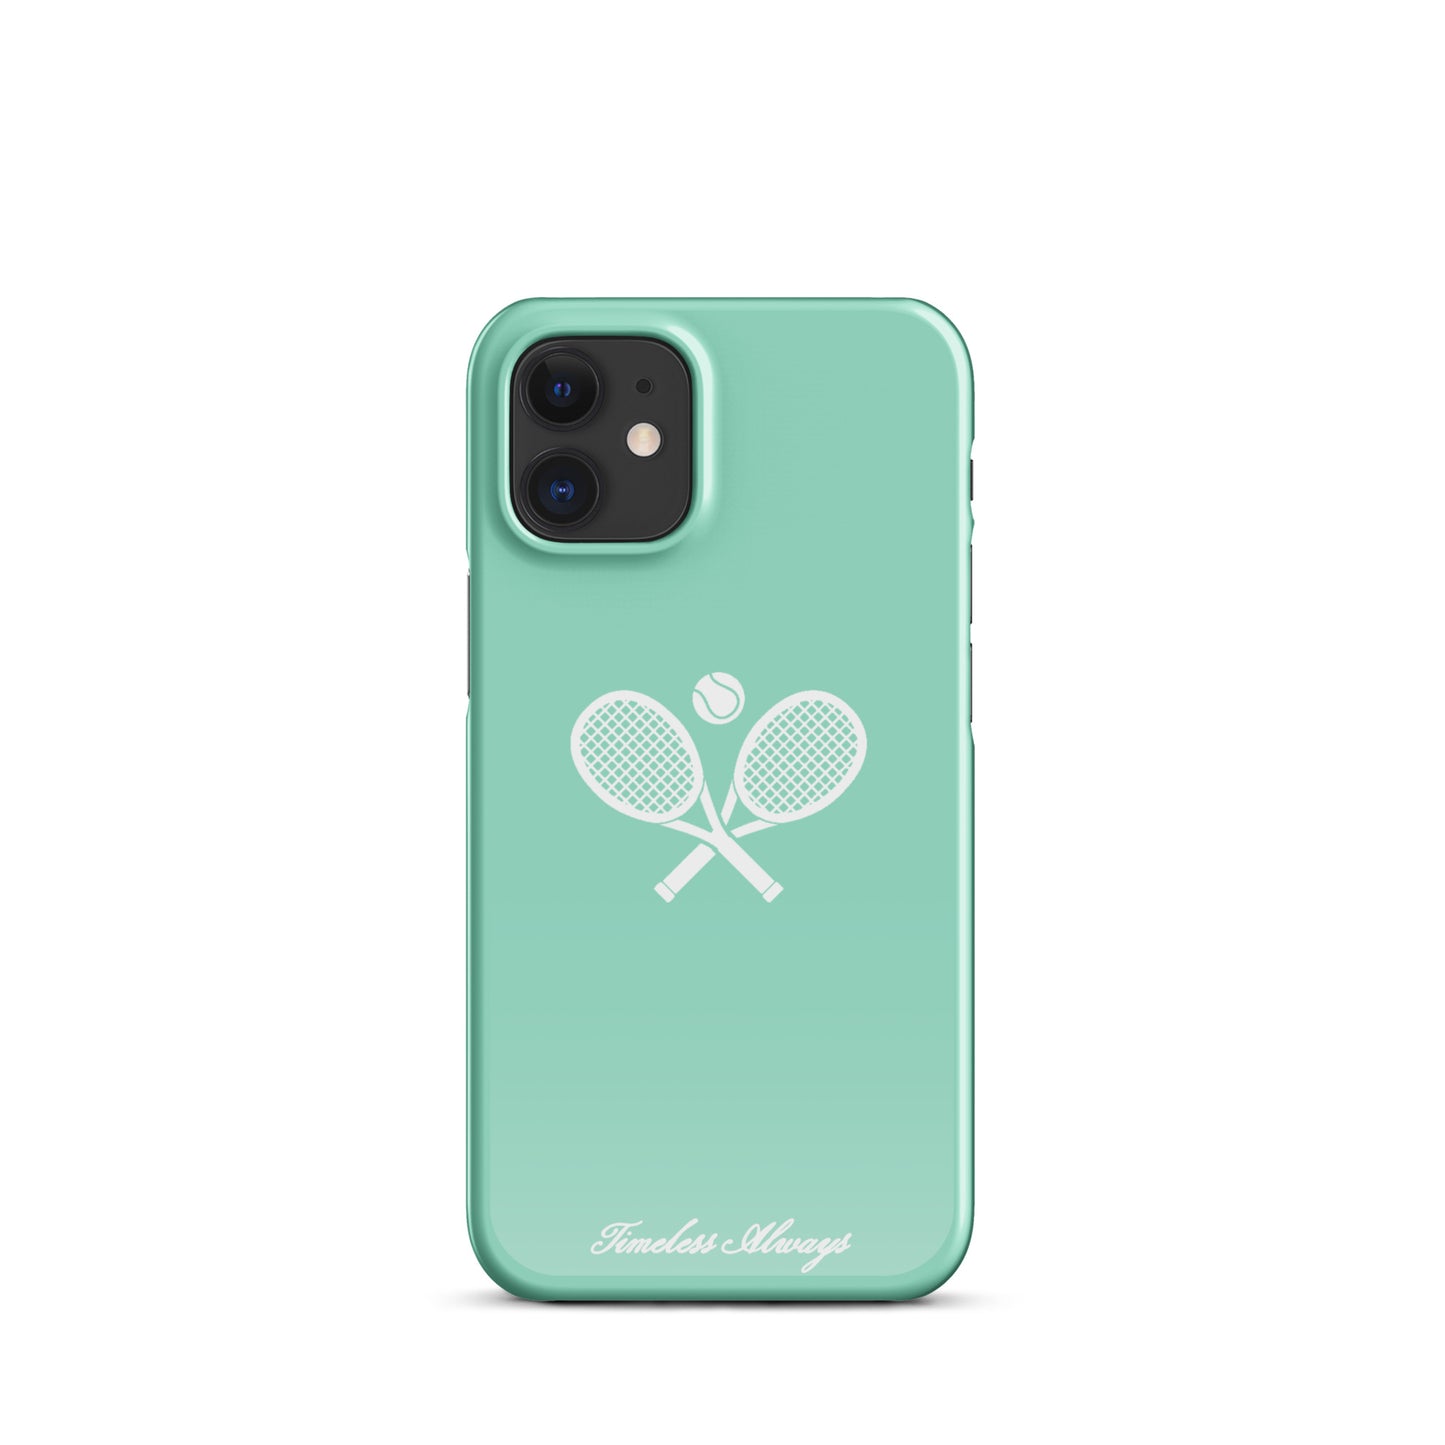 Tennis Club iPhone® case